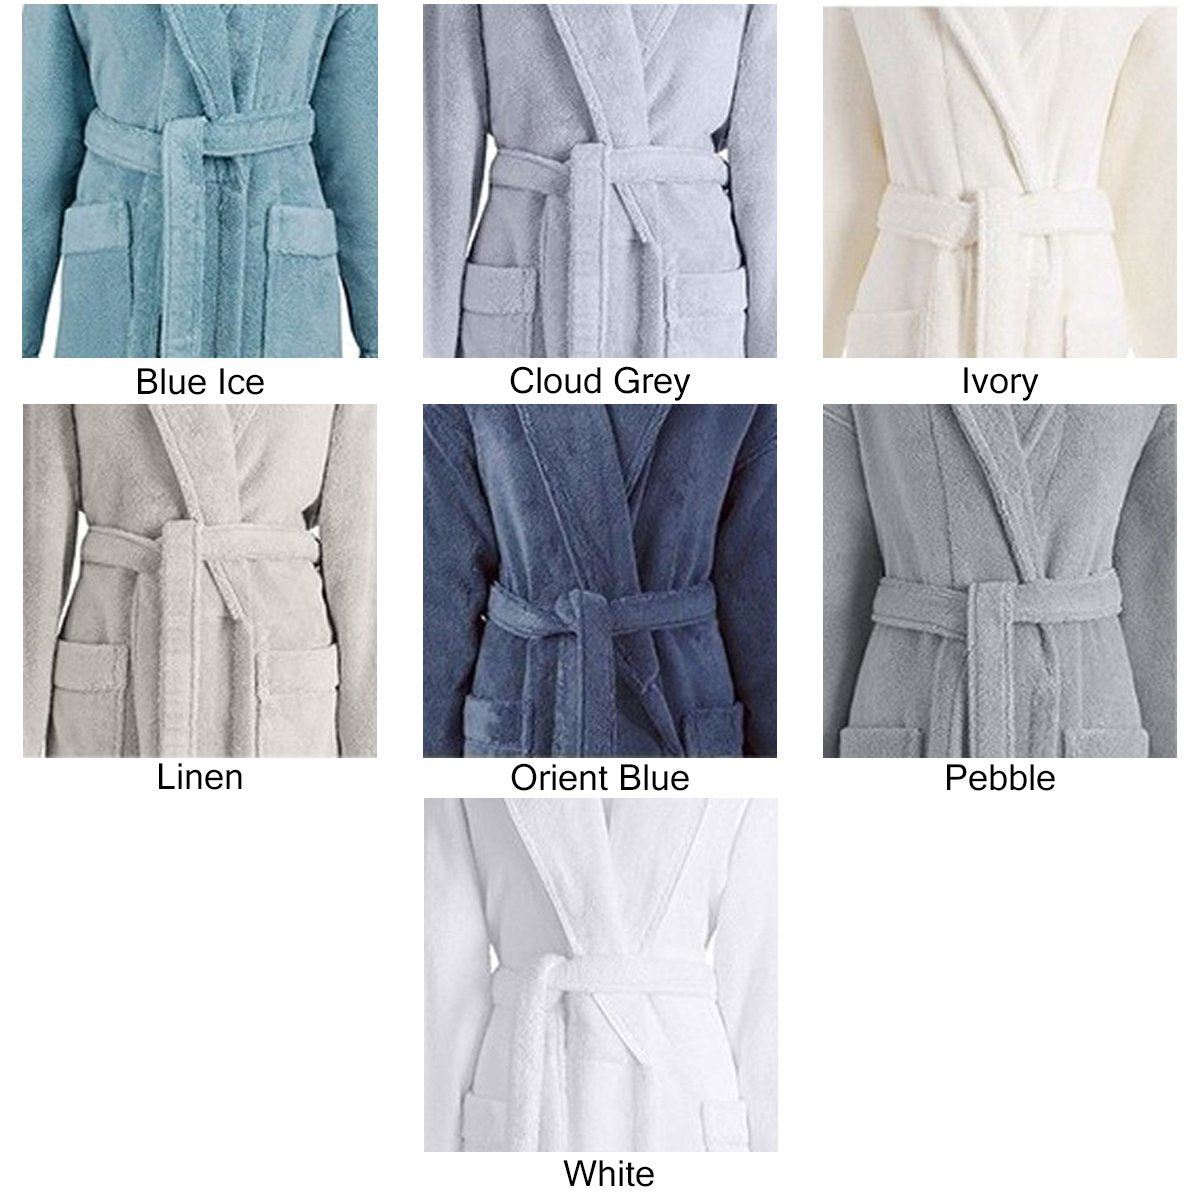 Caresse Bath Robes - Pioneer Linens